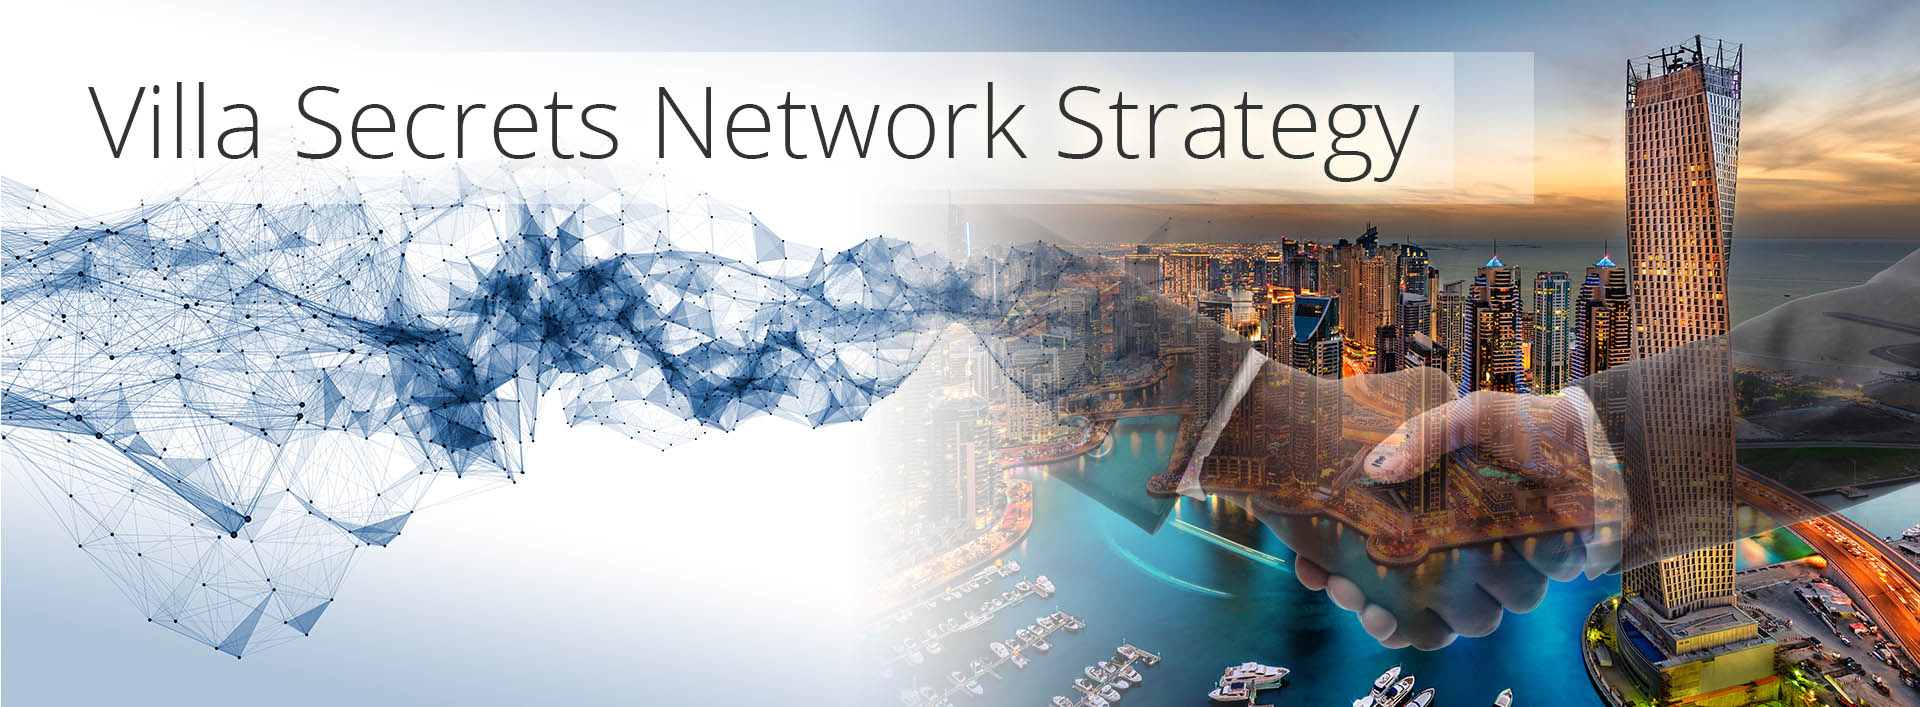 Villa-Secrets-Network-Strategy